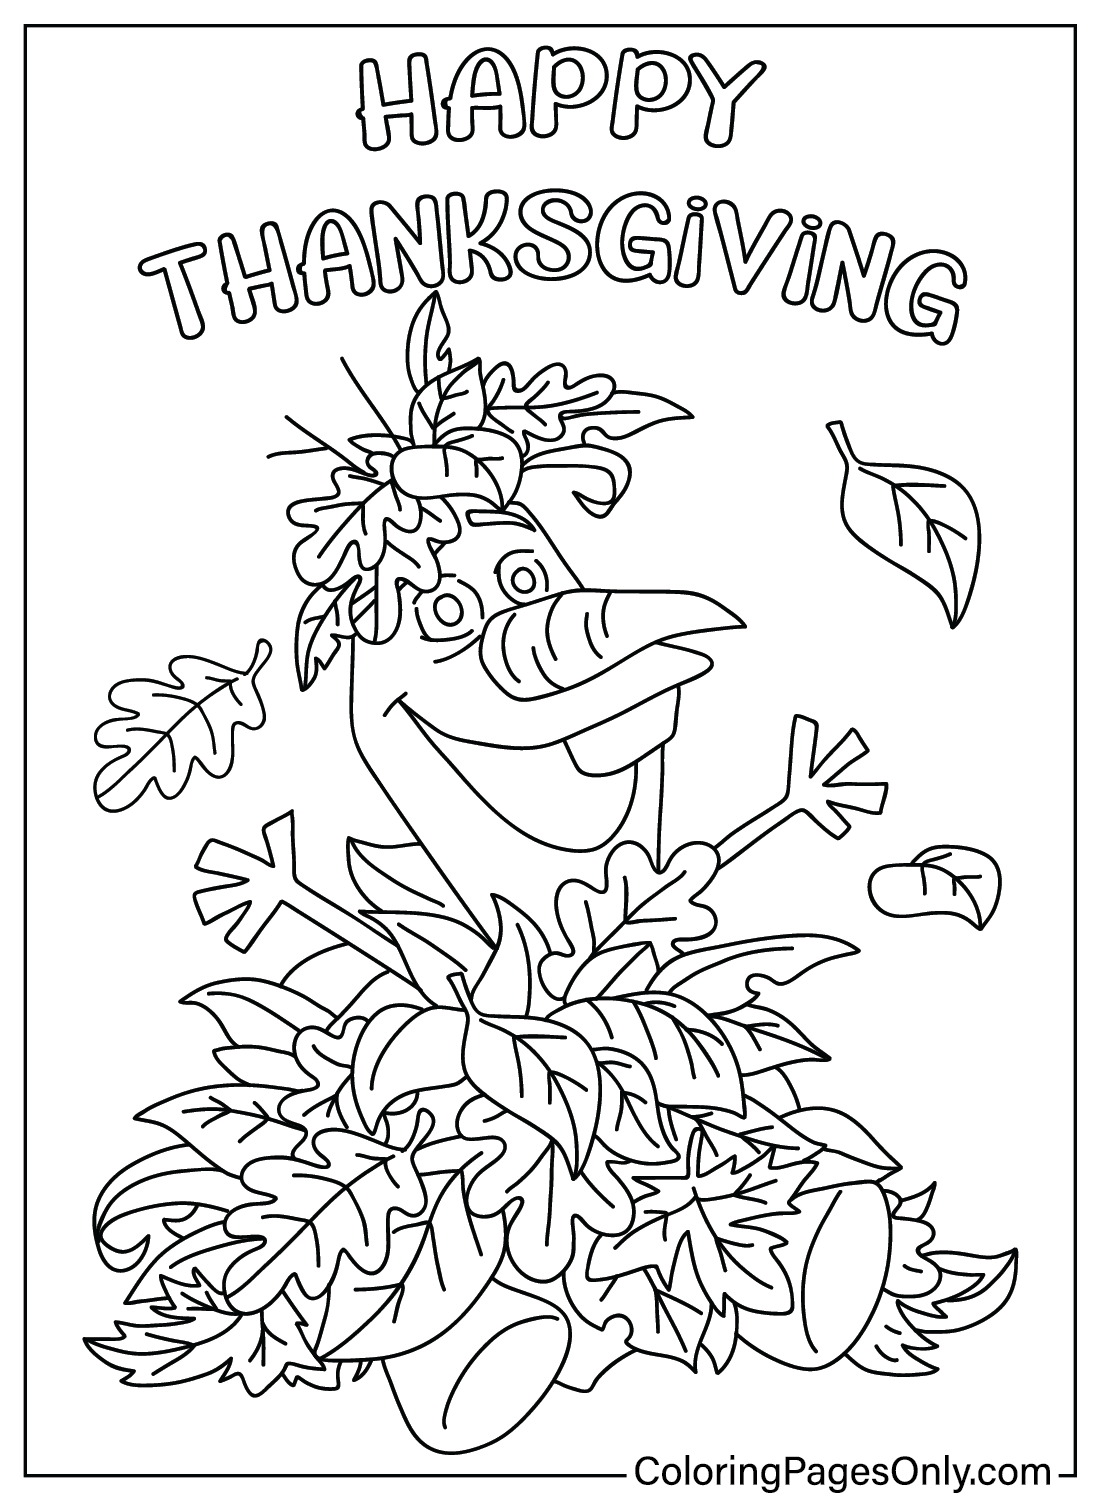 Olaf Disney Thanksgiving kleurplaat van Disney Thanksgiving